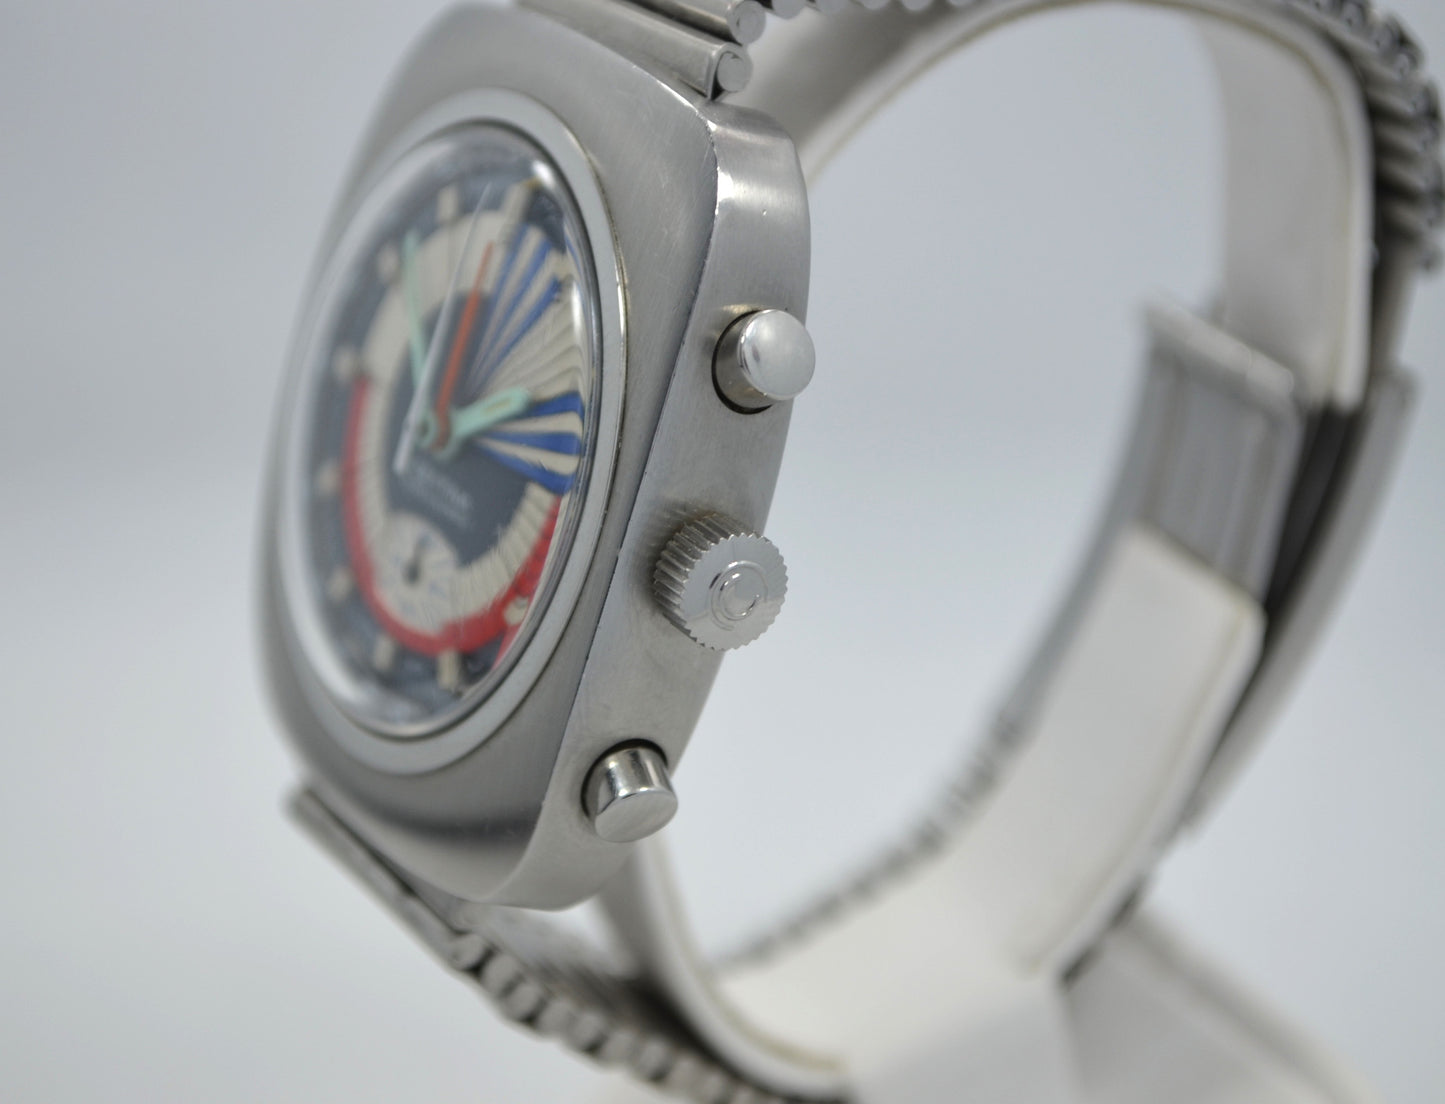 Vintage Certina Chronolympic Regatta Valjoux 728 Chronograph Steel Wristwatch - Hashtag Watch Company